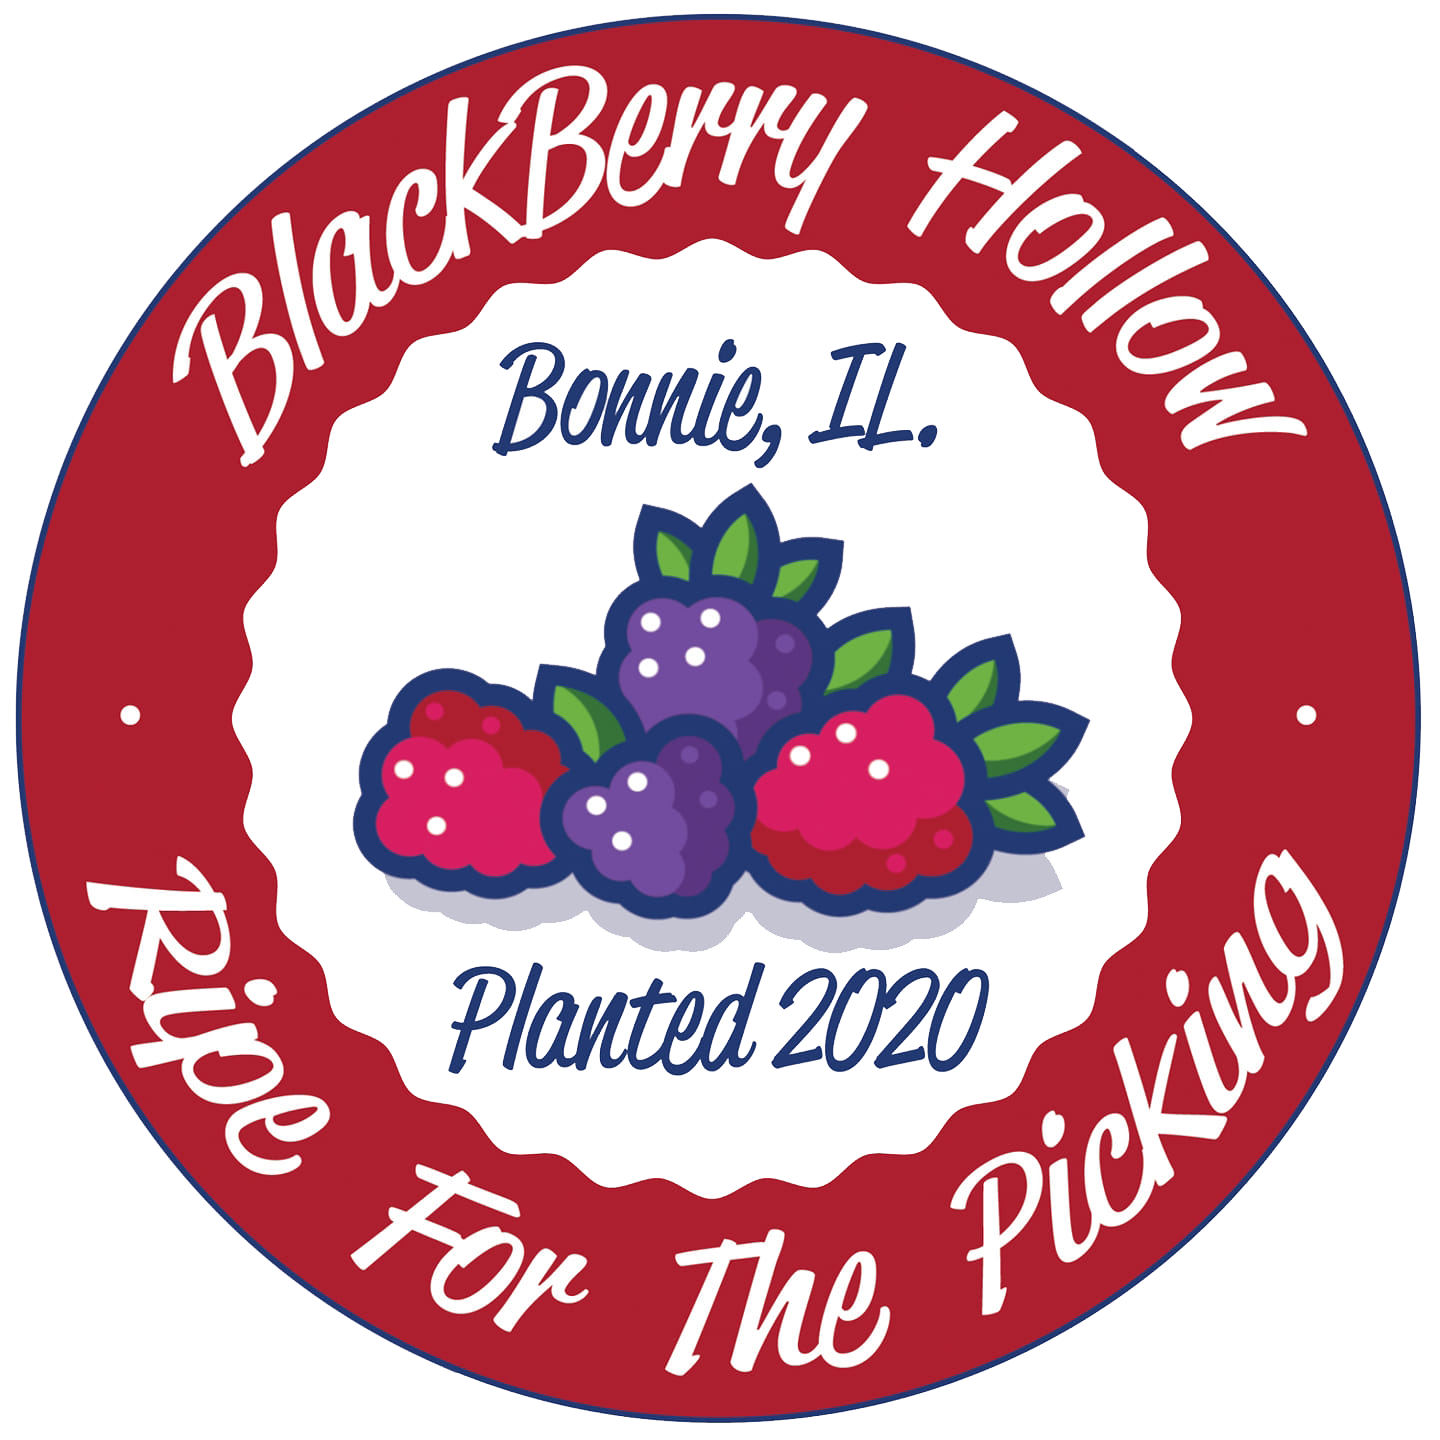 Blackberry Hollow U-Pick Farm